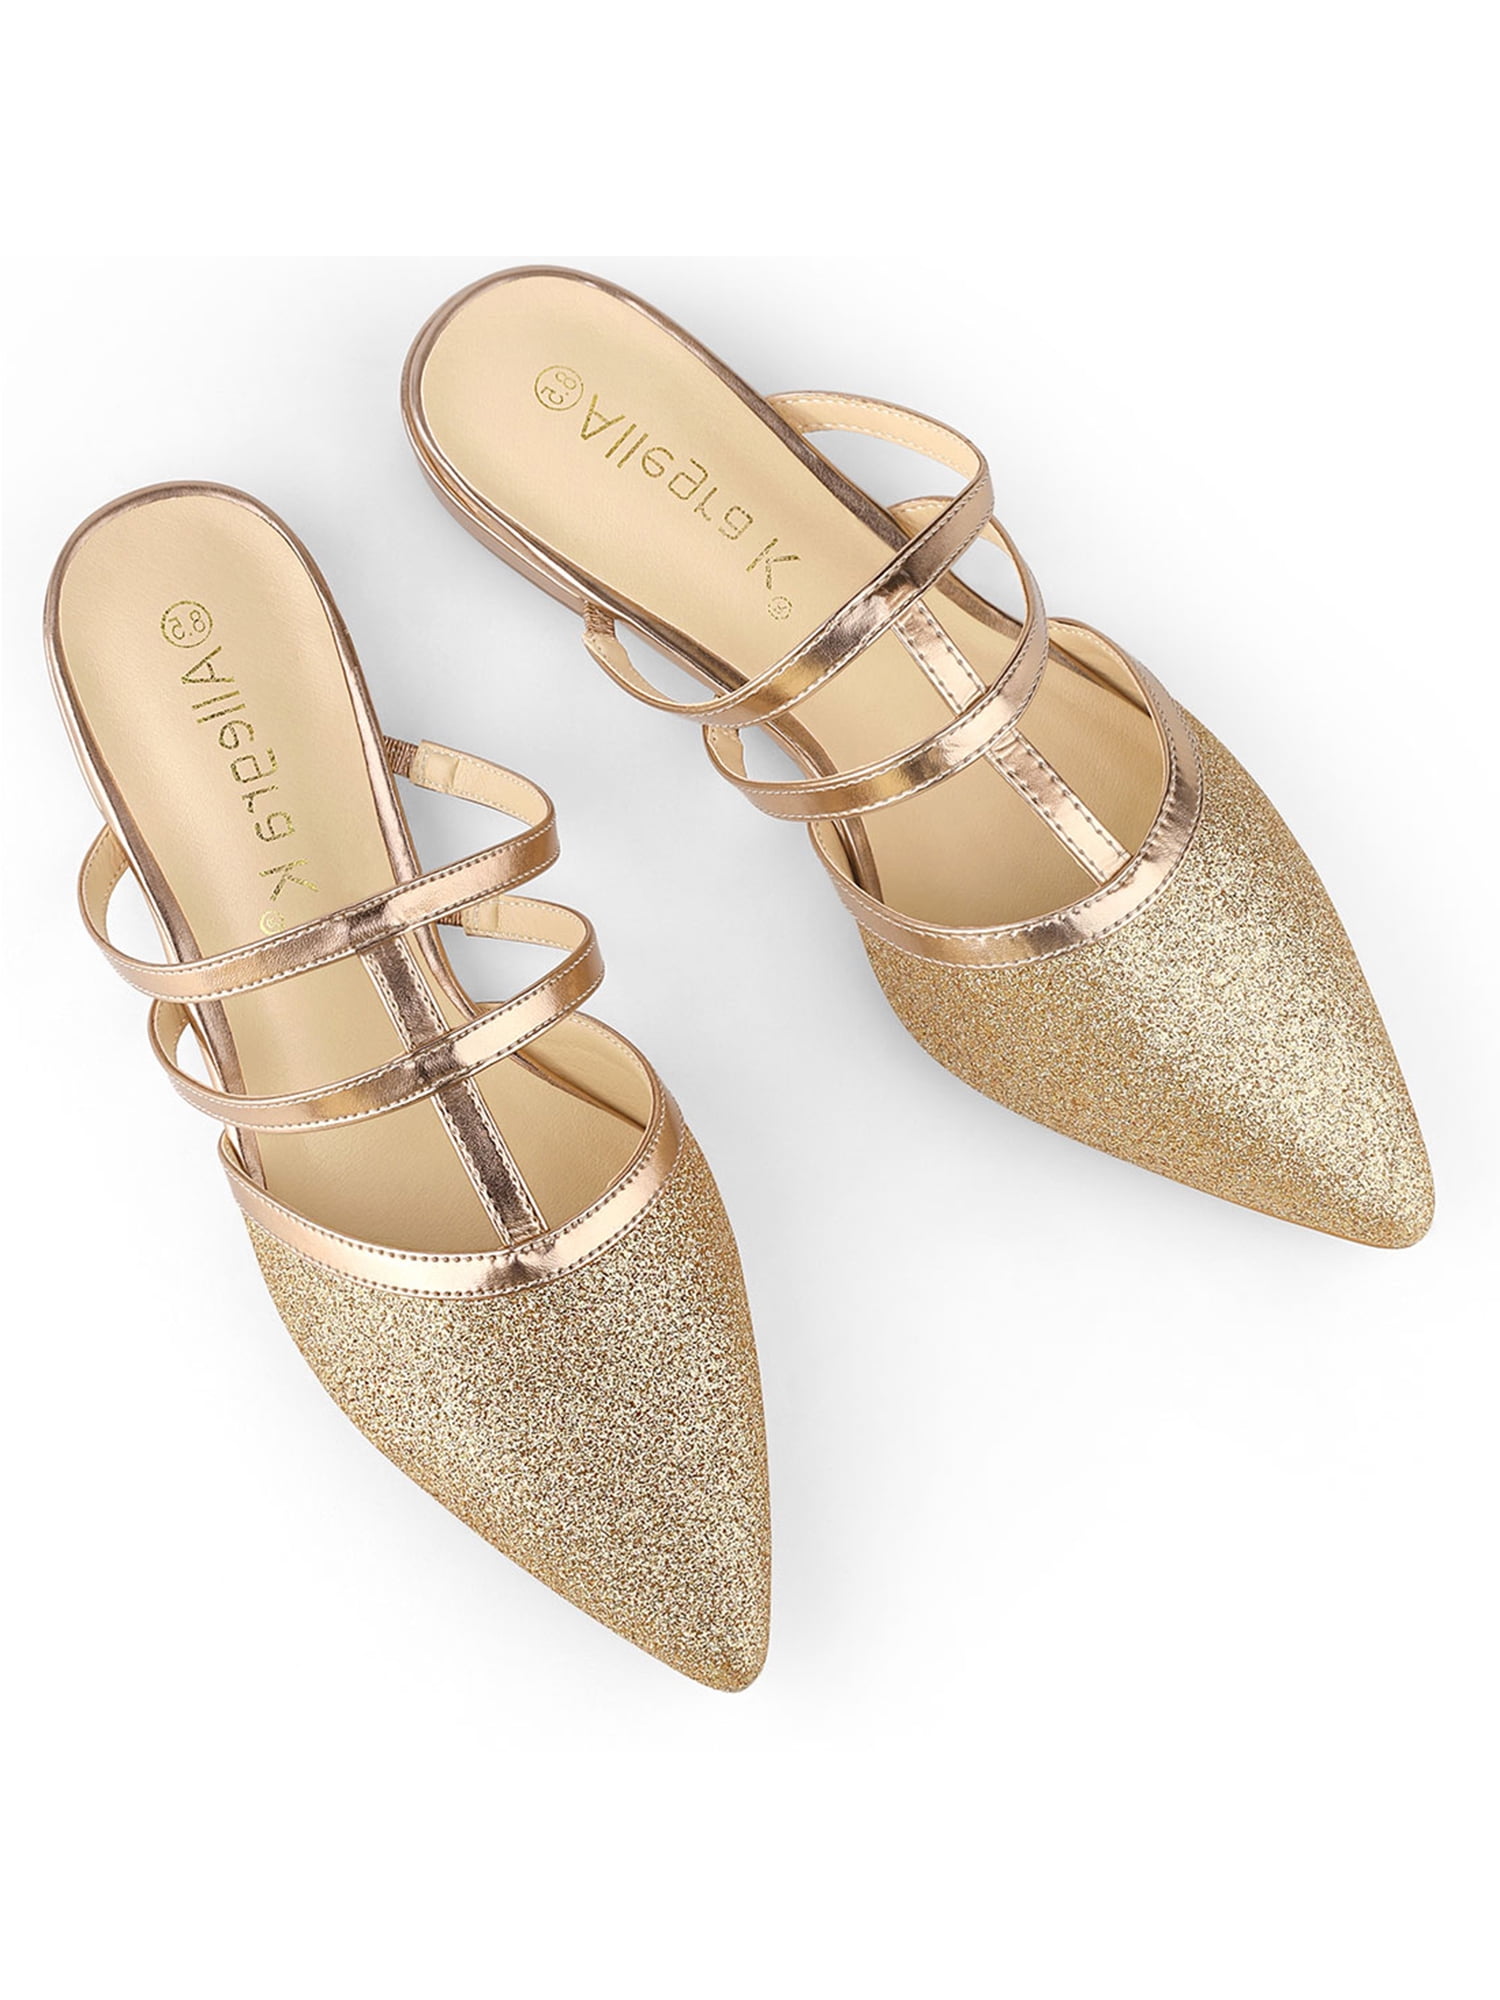 Allegra K - Allegra K Women's Glitter Pointy Toe Flats Mules Gold 8.5 ...